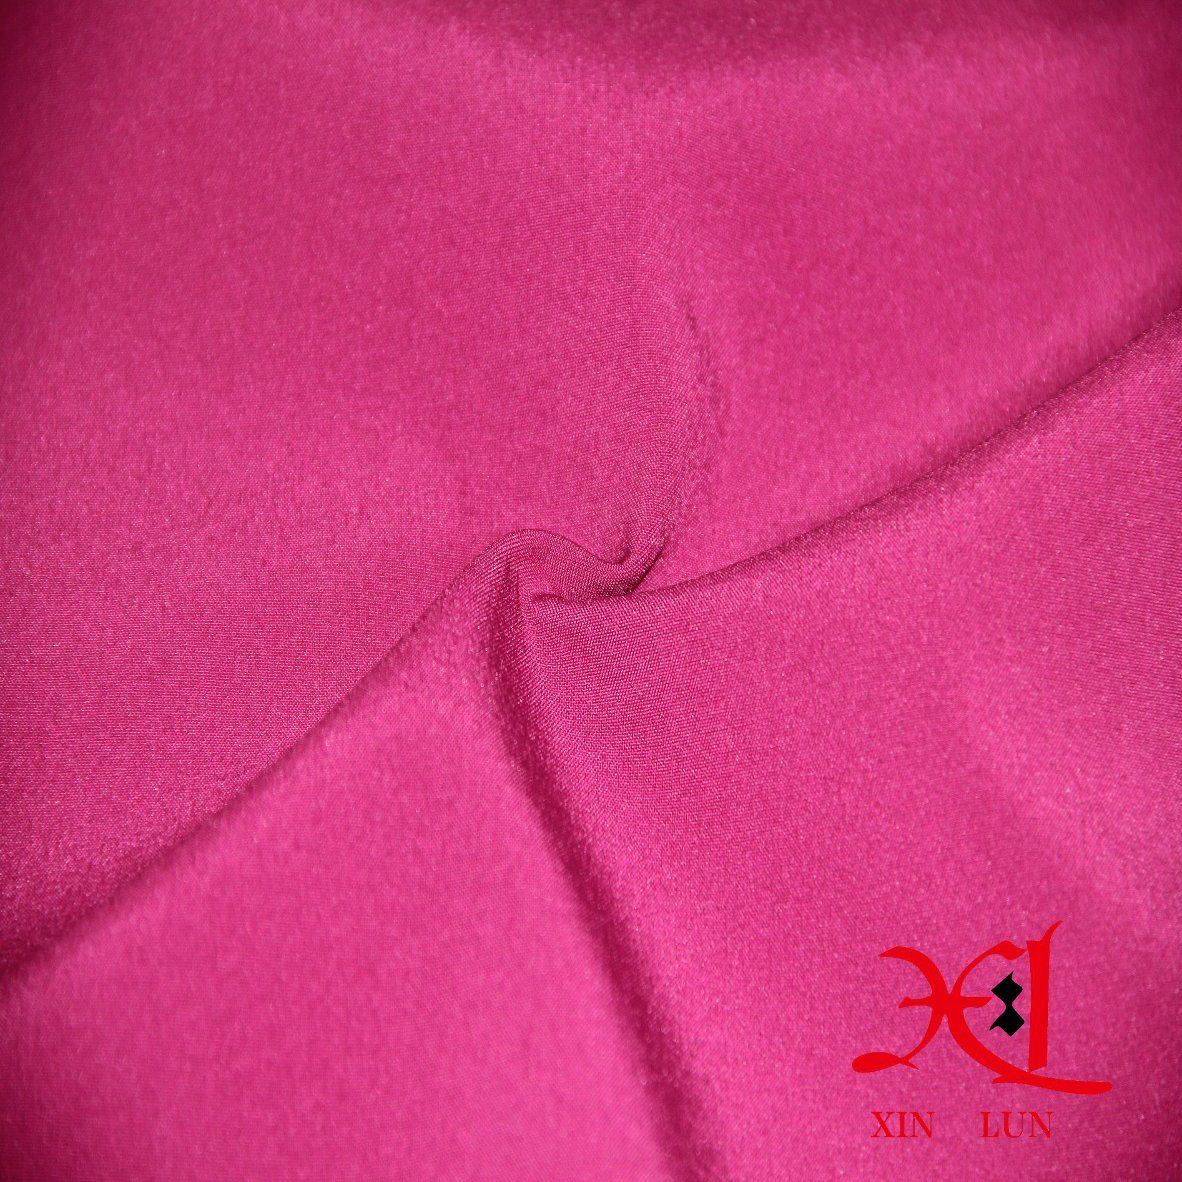 Stretch Polyester TPU Laminate Soft Shell Fabric for Windbreaker/Jacket